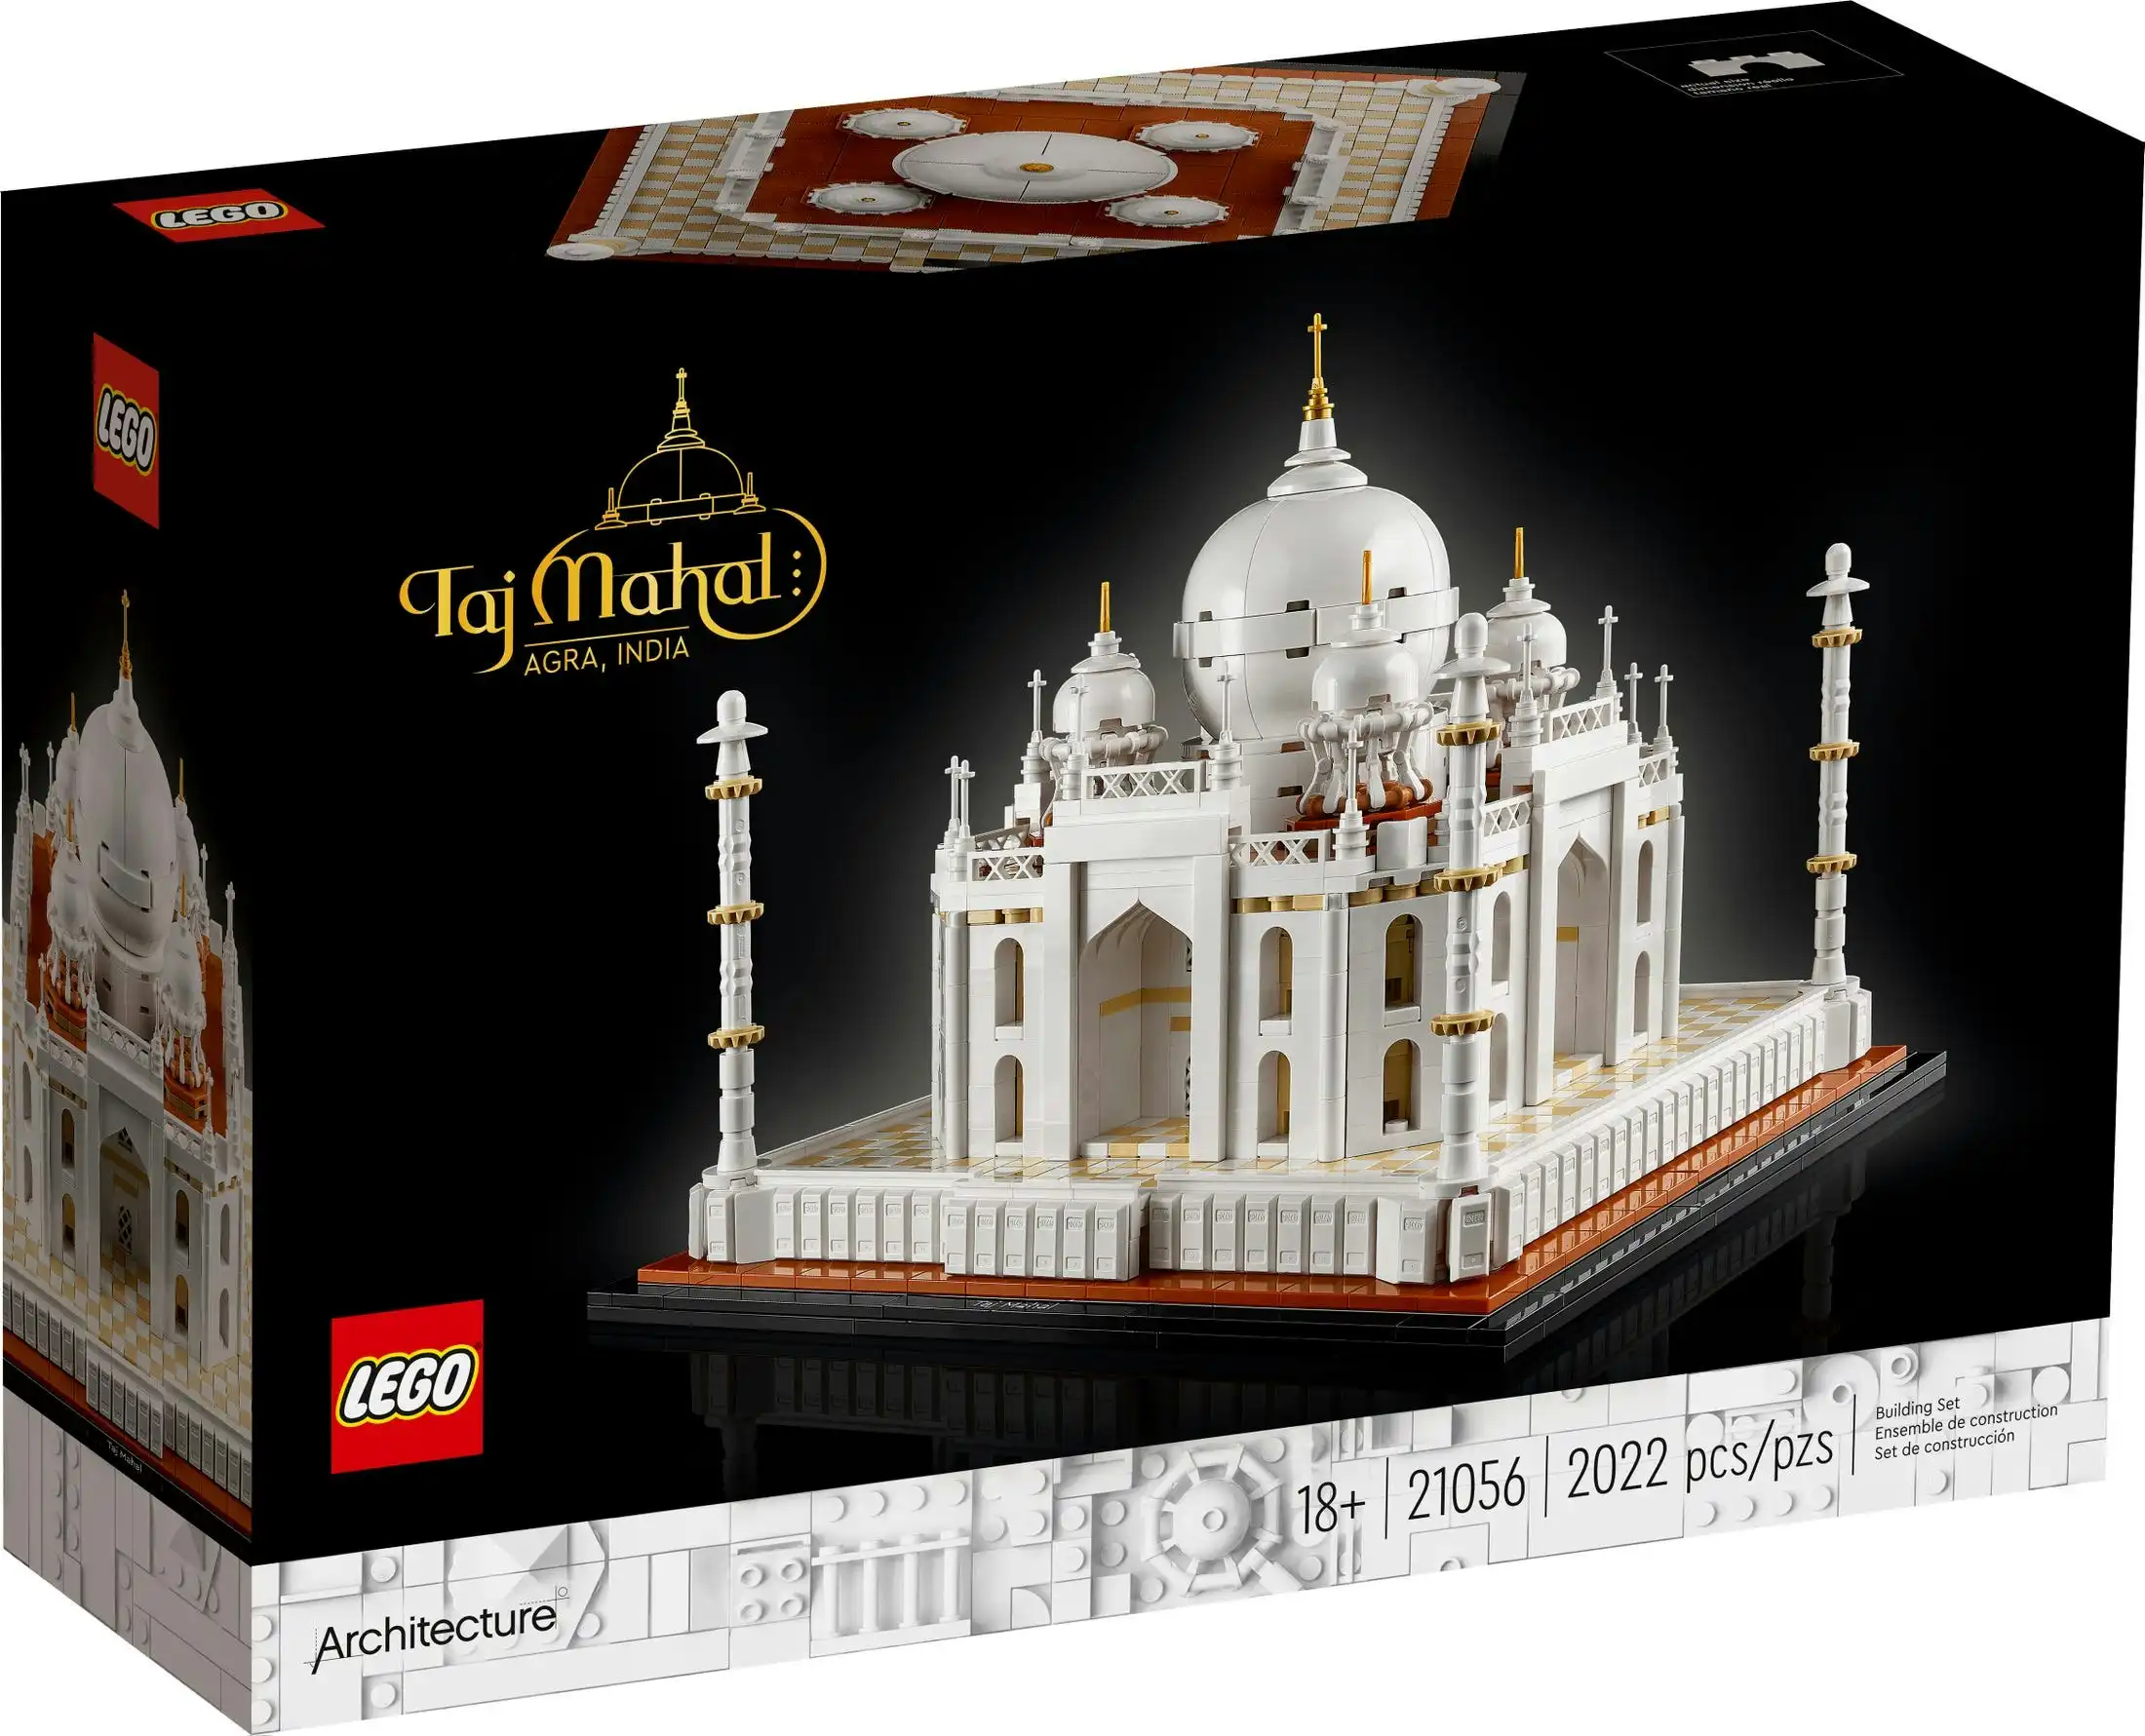 LEGO 21056 Taj Mahal - Architecture